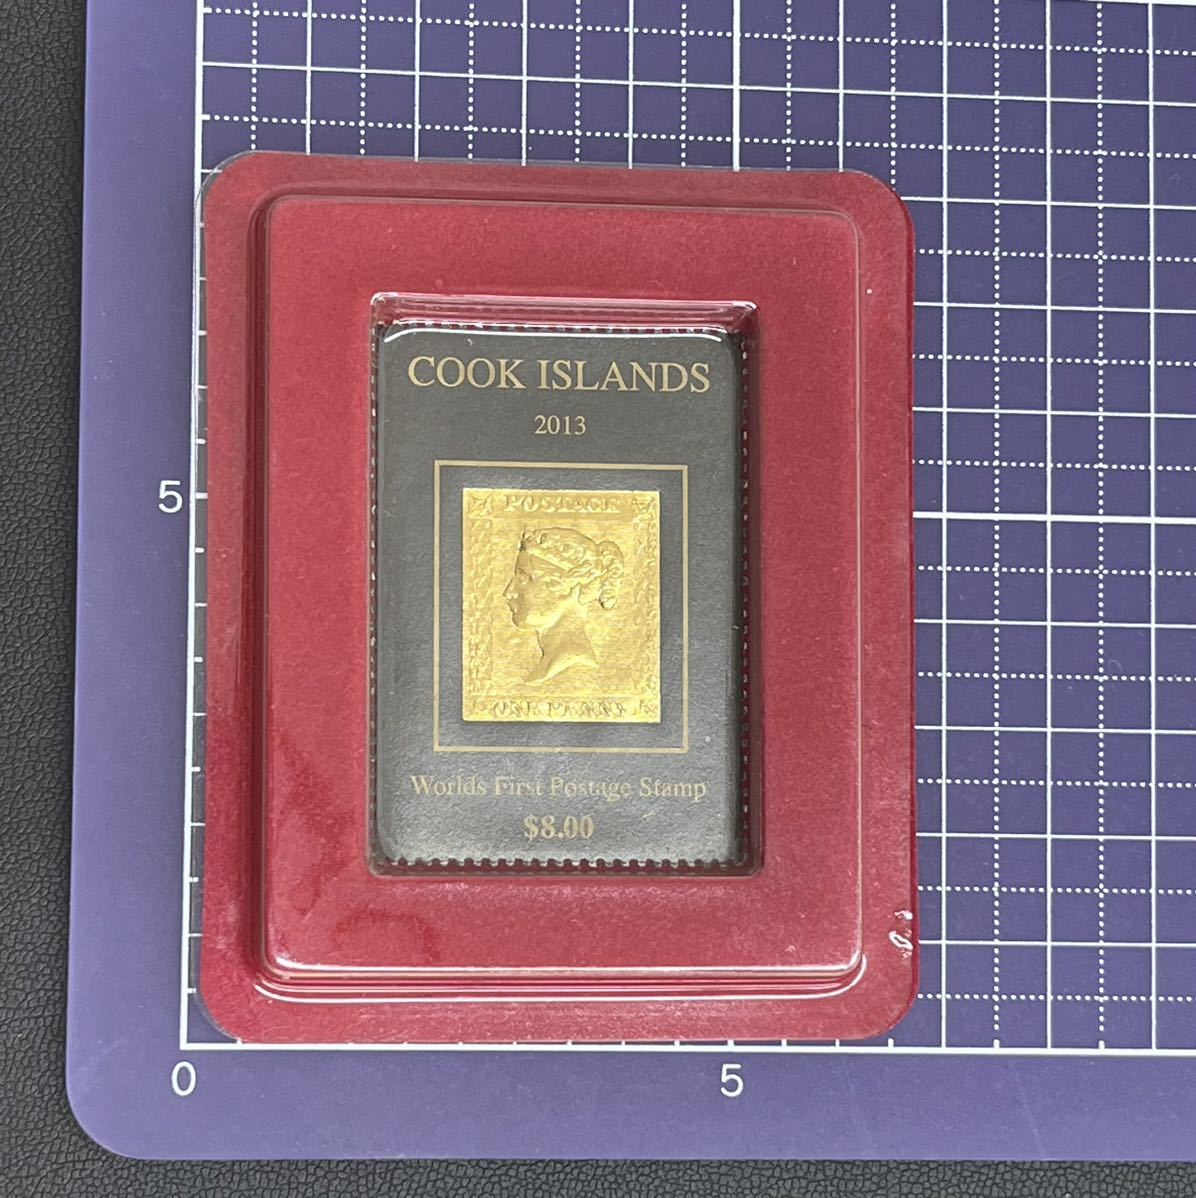 〈N8〉 ペニーブラック クック諸島発行 記念切手 金箔 K22 COOK ISLANDS 2013年 ＄8.00_画像1